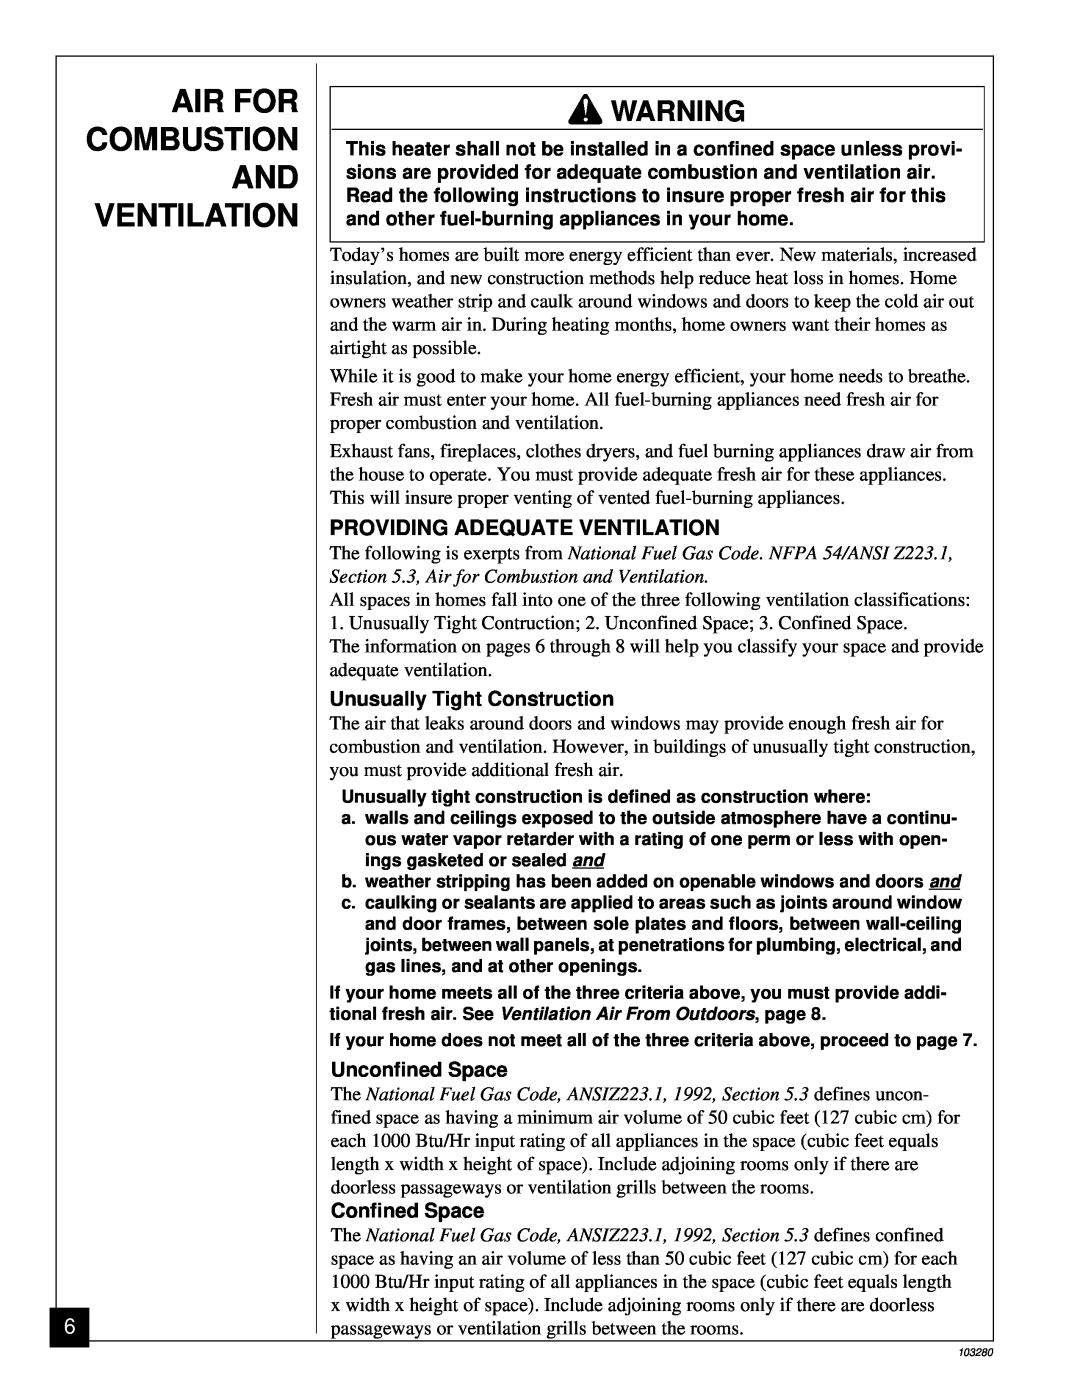 Desa FPVF33PR installation manual Air For Combustion And Ventilation, Providing Adequate Ventilation 